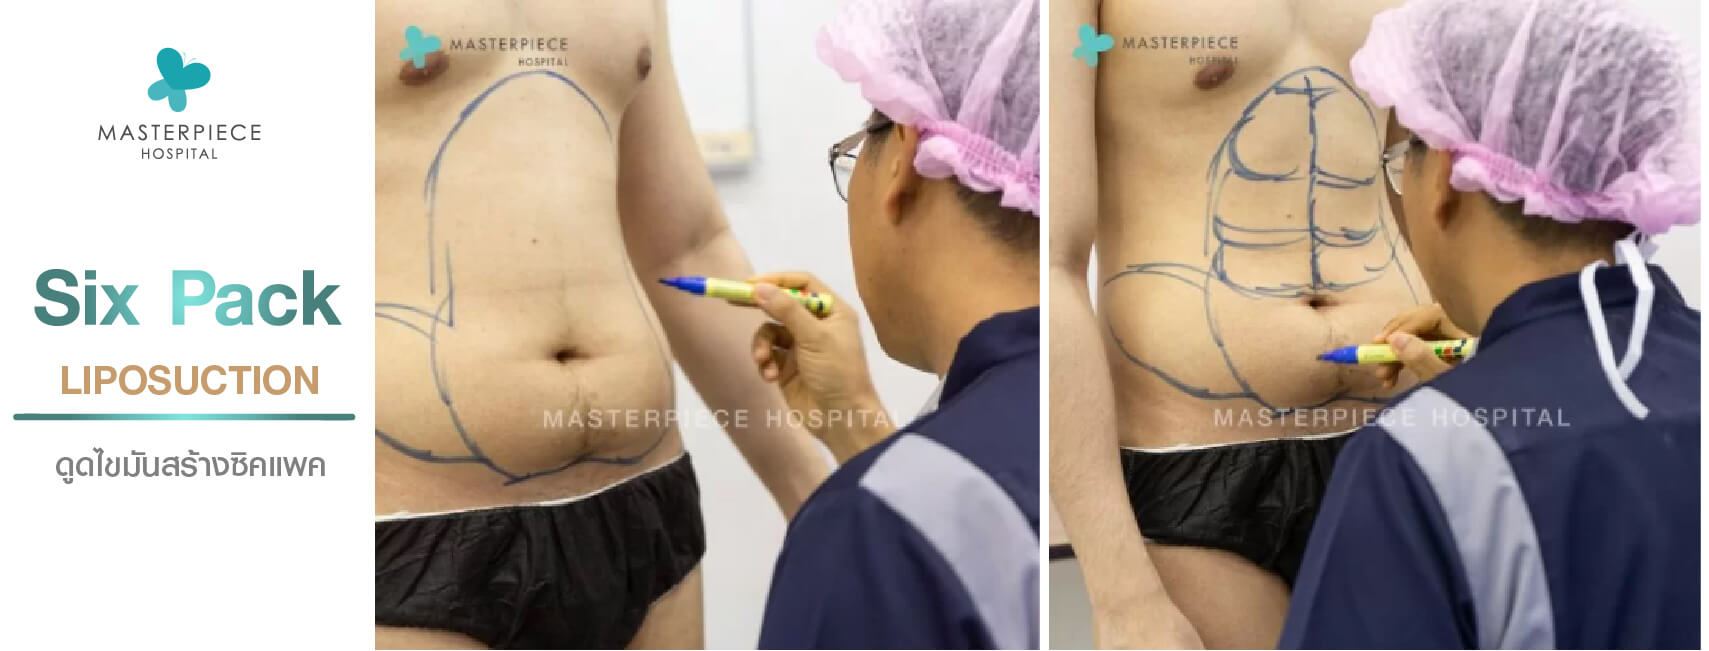 six pack liposuction แพทย์จะทำการวางแผนการทำหัตถการก่อนลงมือ เพื่อผลัพธ์ที่ดีที่สุด